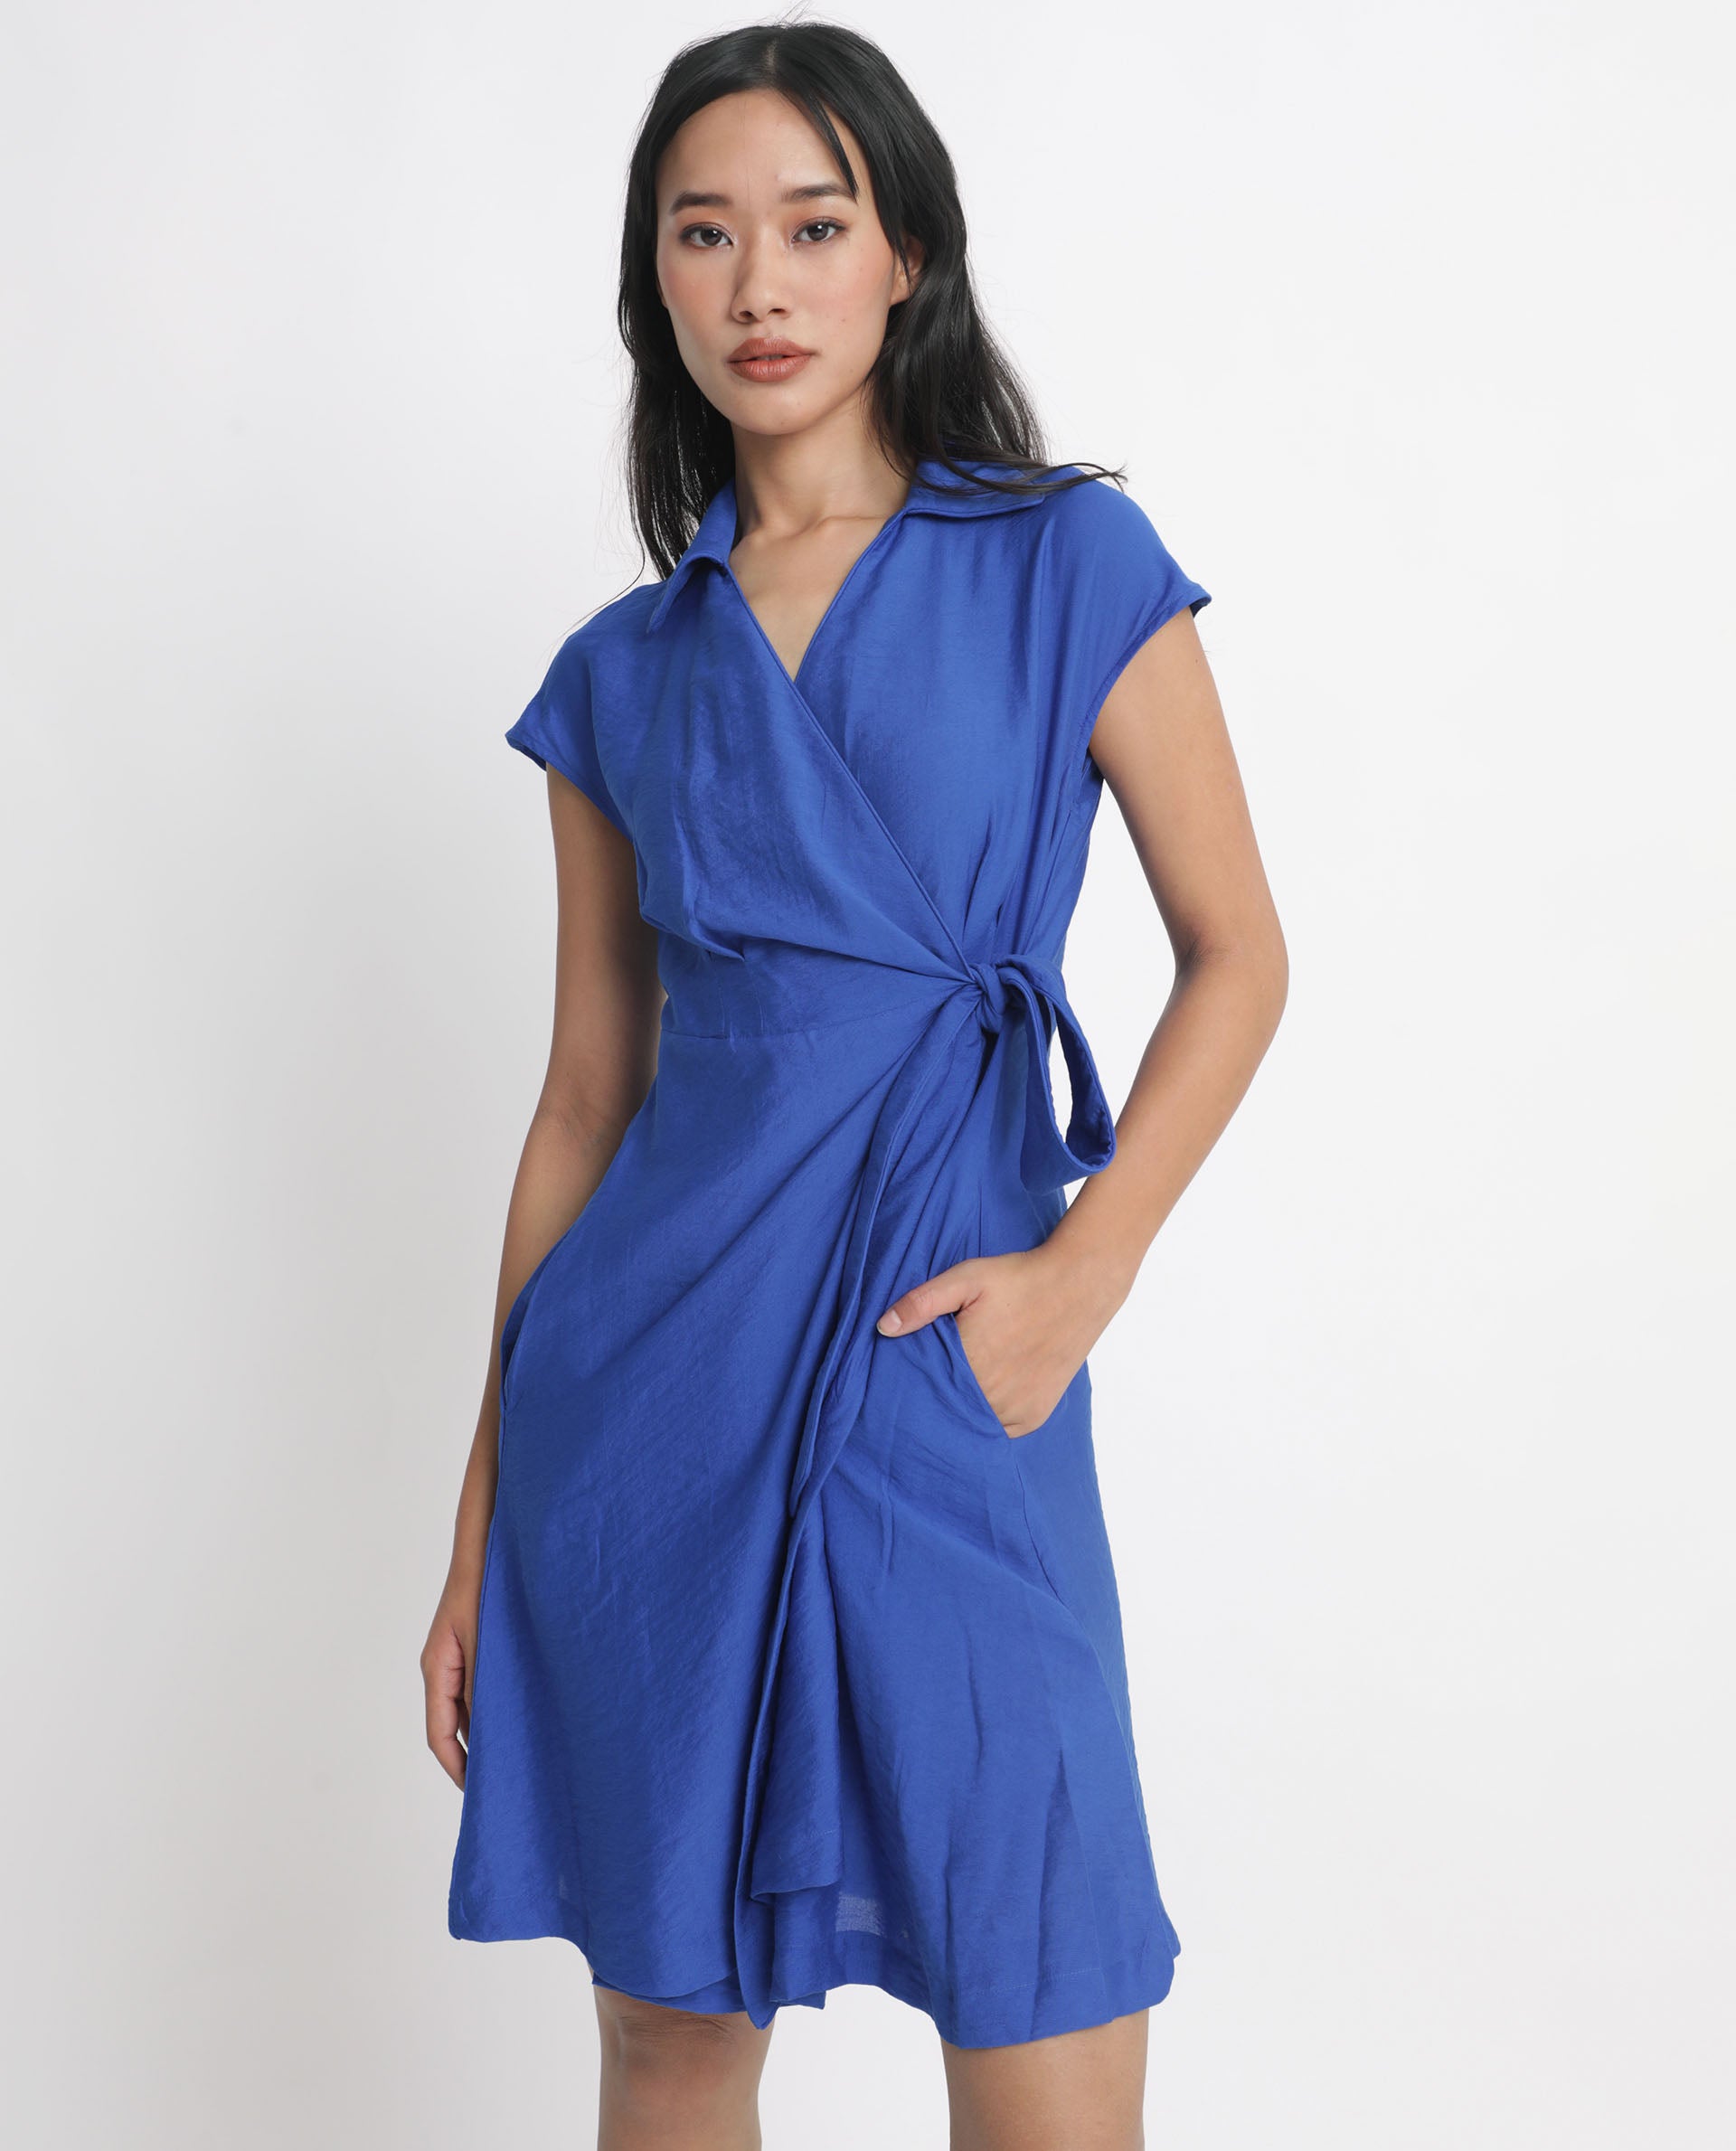 SUIVANTE Straight Solid Gown Nylon Fabric For Women - Black